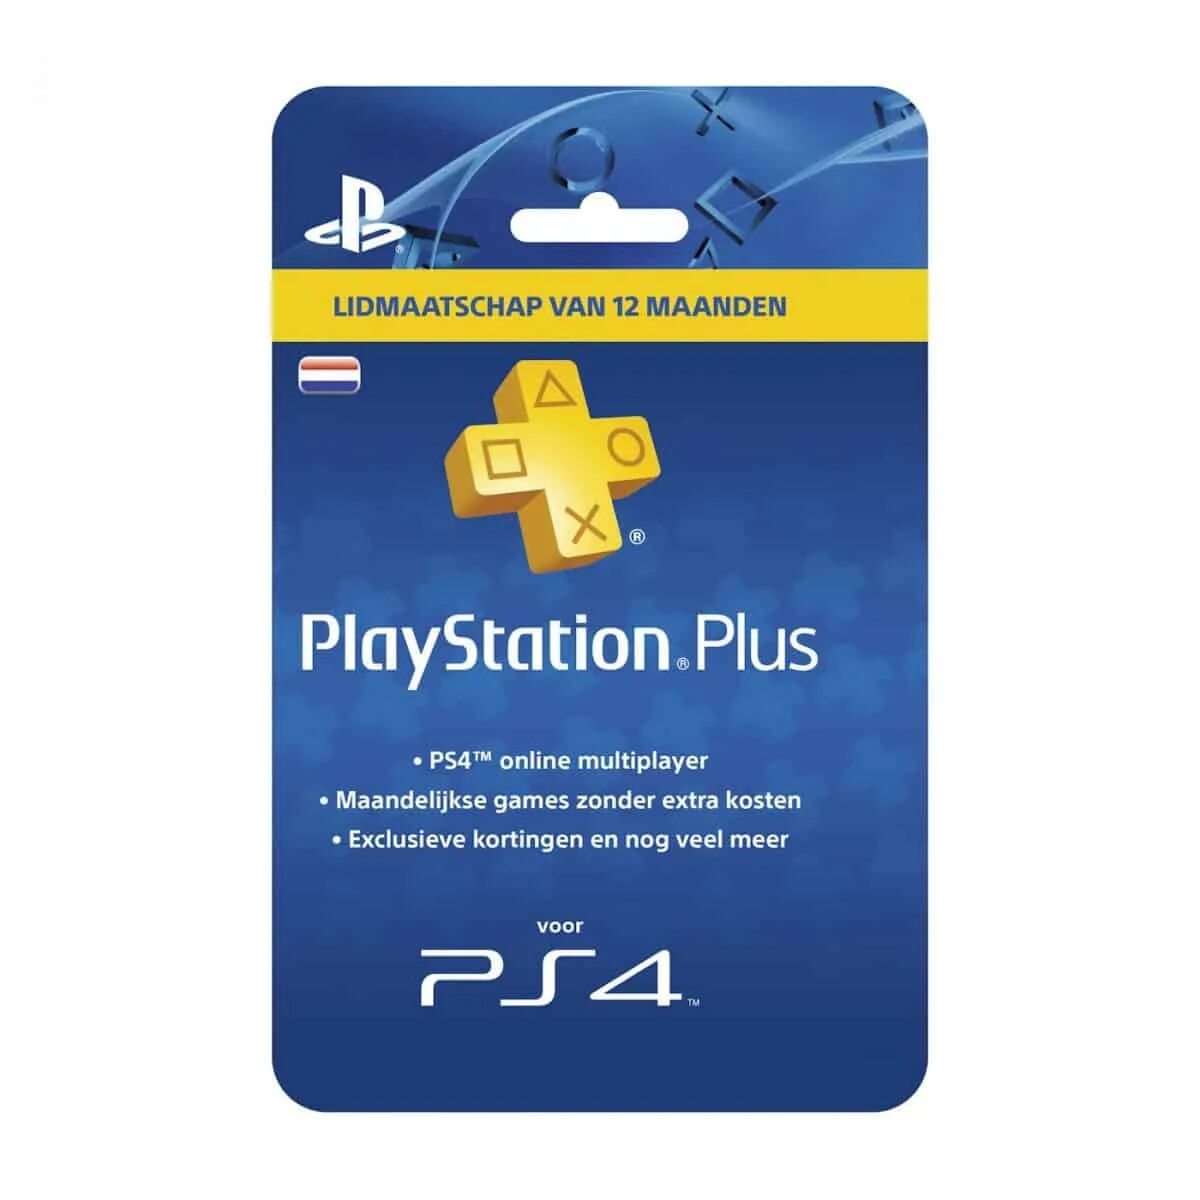 Ps4 plus купить. PS Plus ps4. PLAYSTATION Plus Card. PLAYSTATION Plus Essential. Sony PS Plus Turkey.